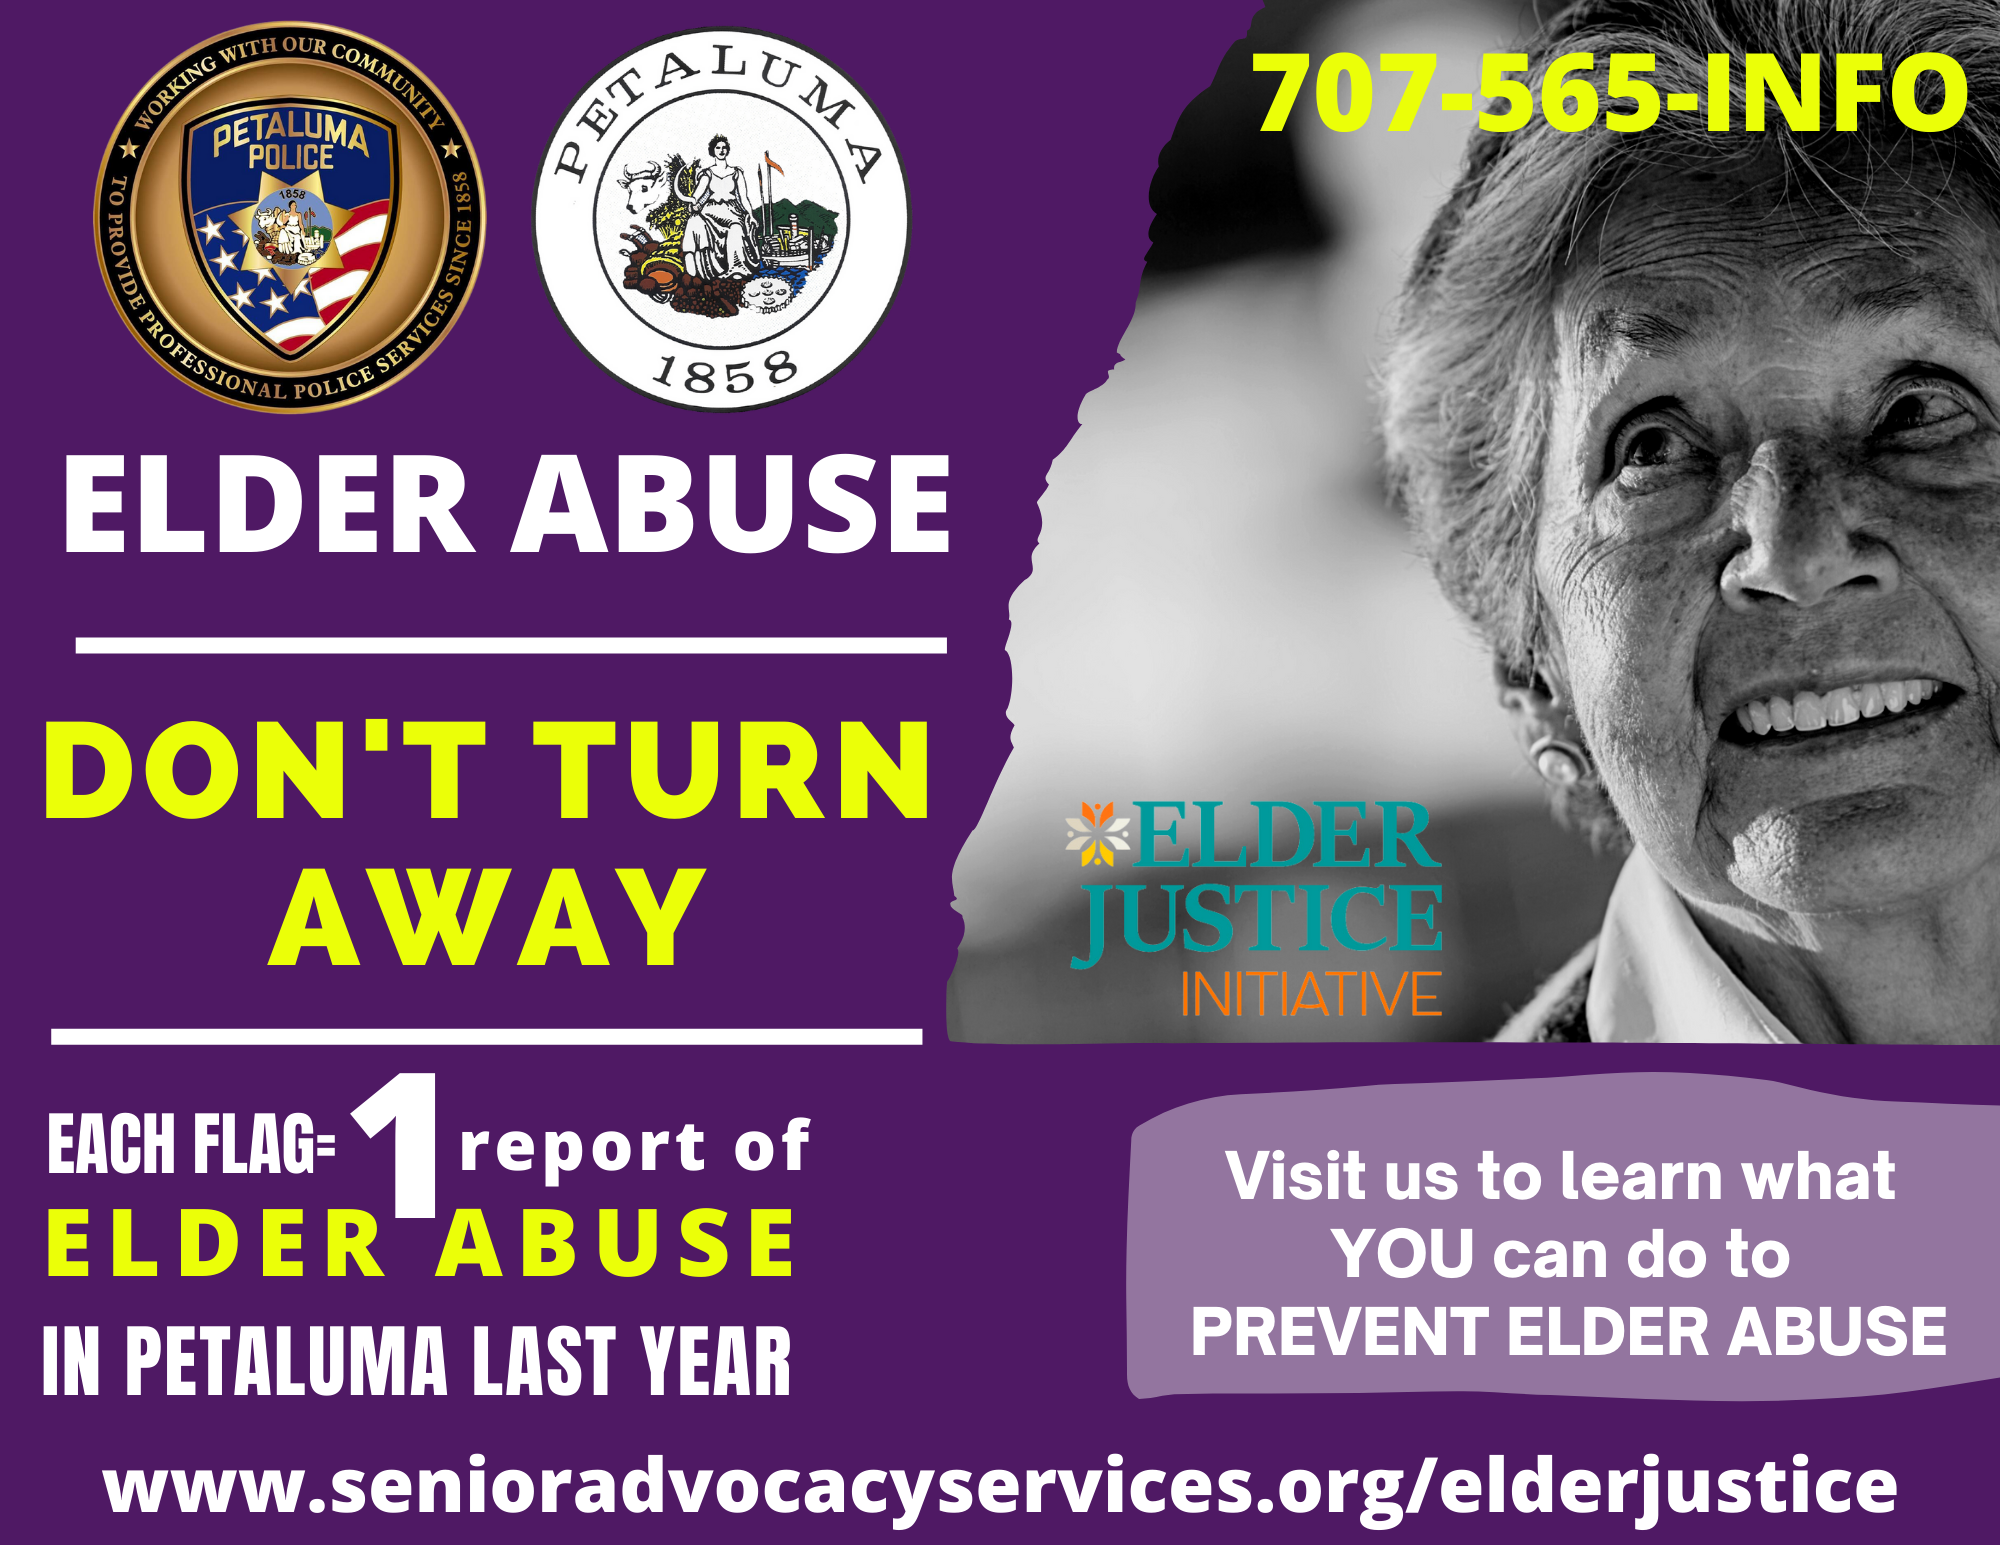 Petaluma Elder Abuse information leaflet graphic. 707-565-INFO